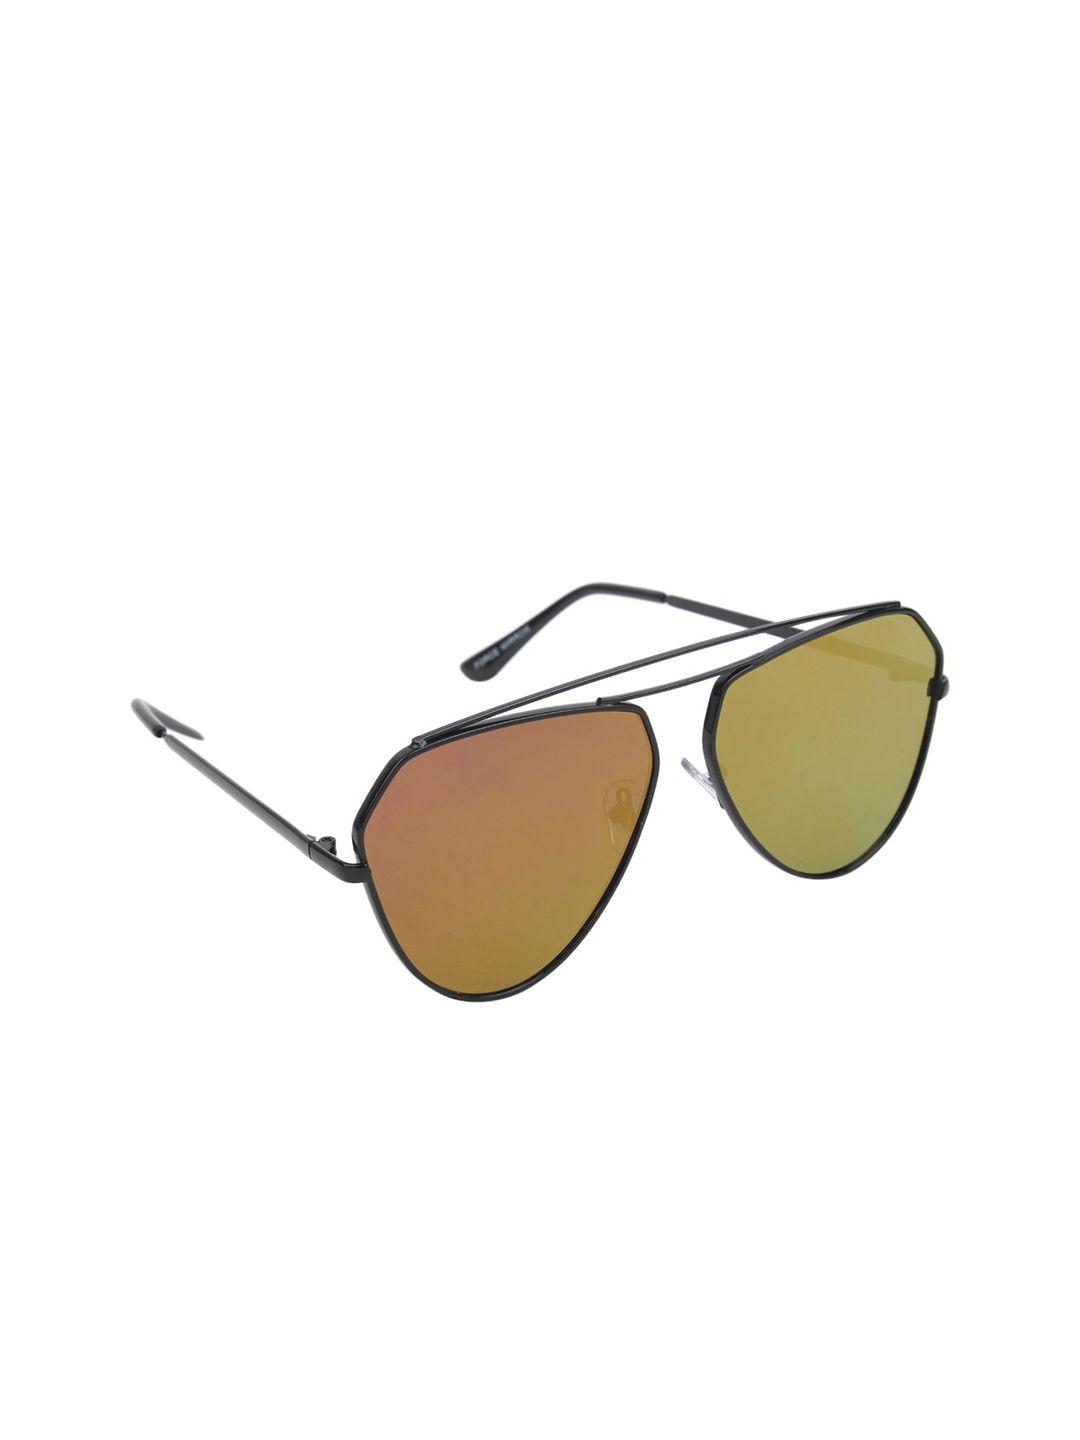 swiss design unisex mirrored lens & black aviator sunglasses with uv protected lens